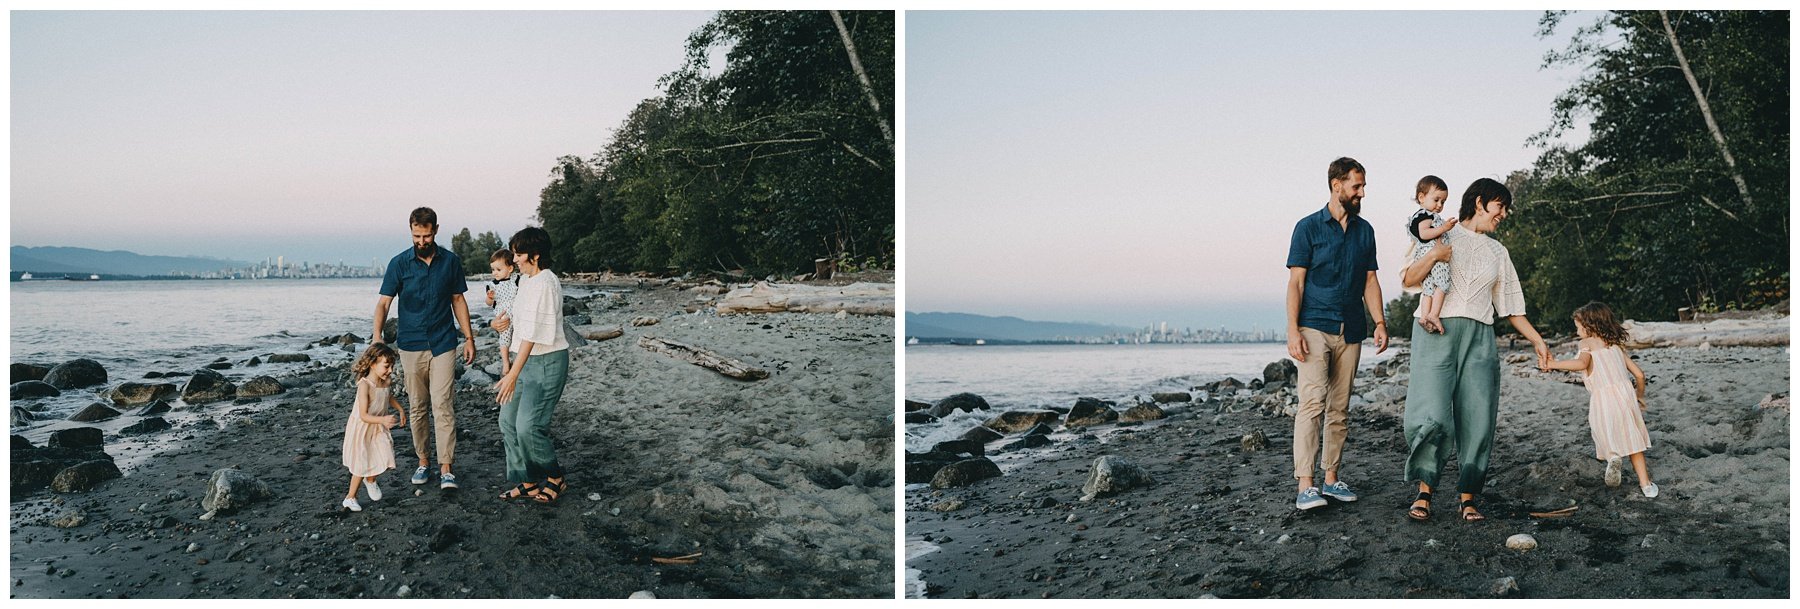 Vancouver Family photographer || Acadia beach  || Jayme Lang_4507.jpg